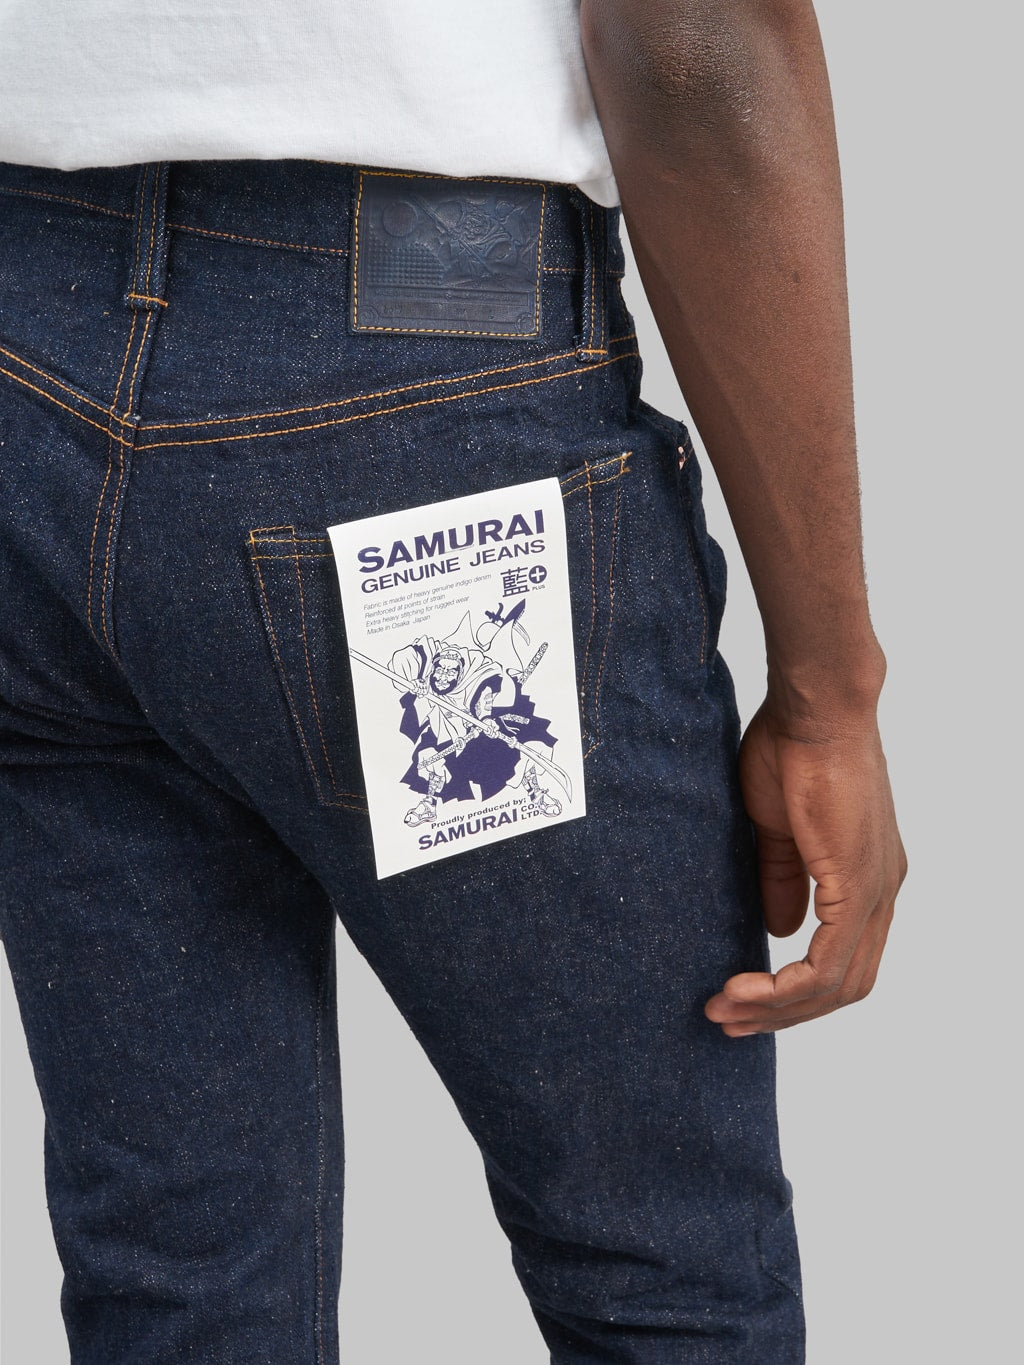 samurai jeans s211ax ai benkei natural indigo 18oz relaxed tapered jeans details